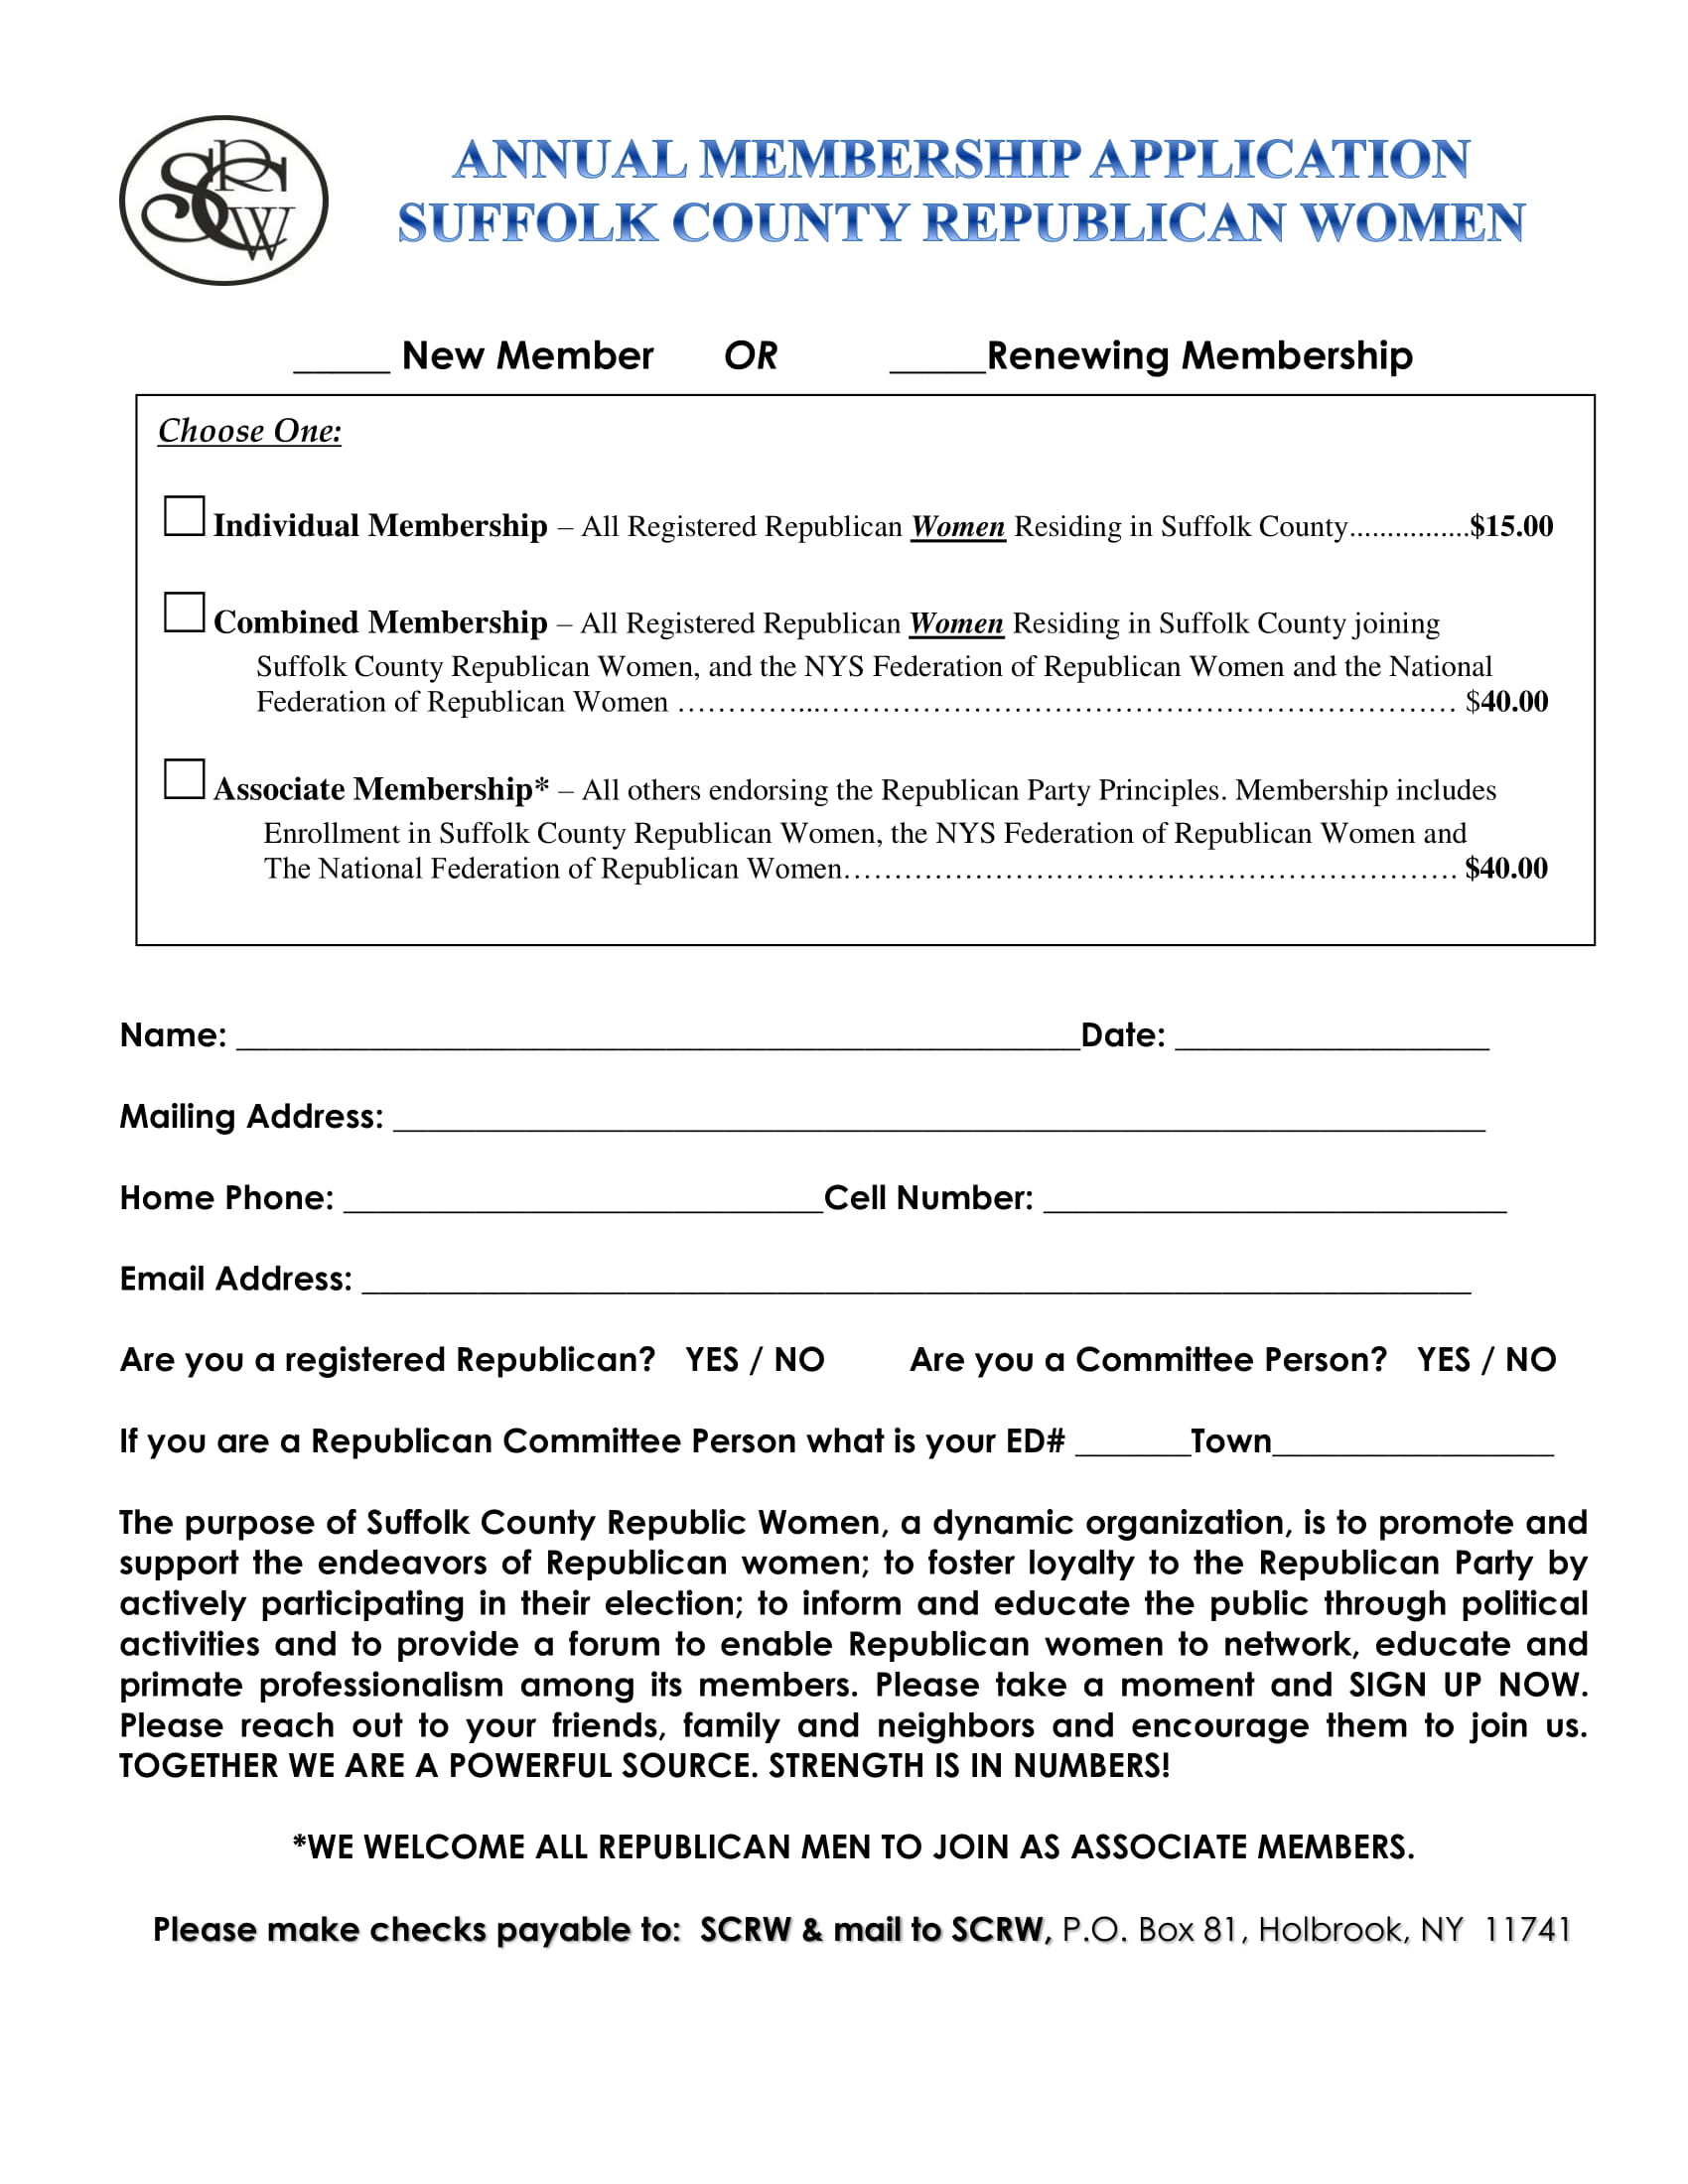 SCRW Membership Application Form